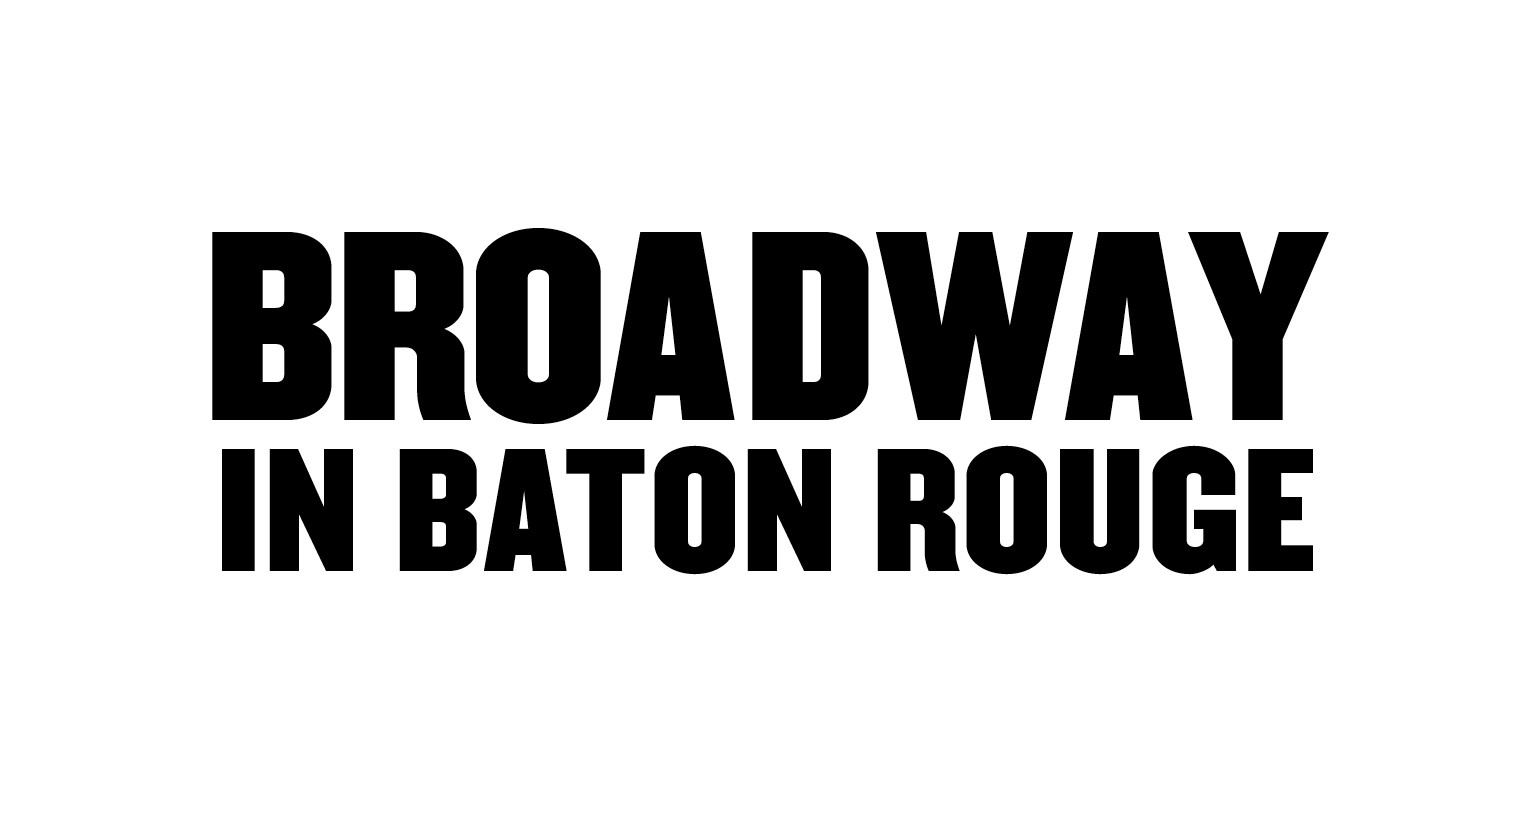 Broadway in Baton Rouge